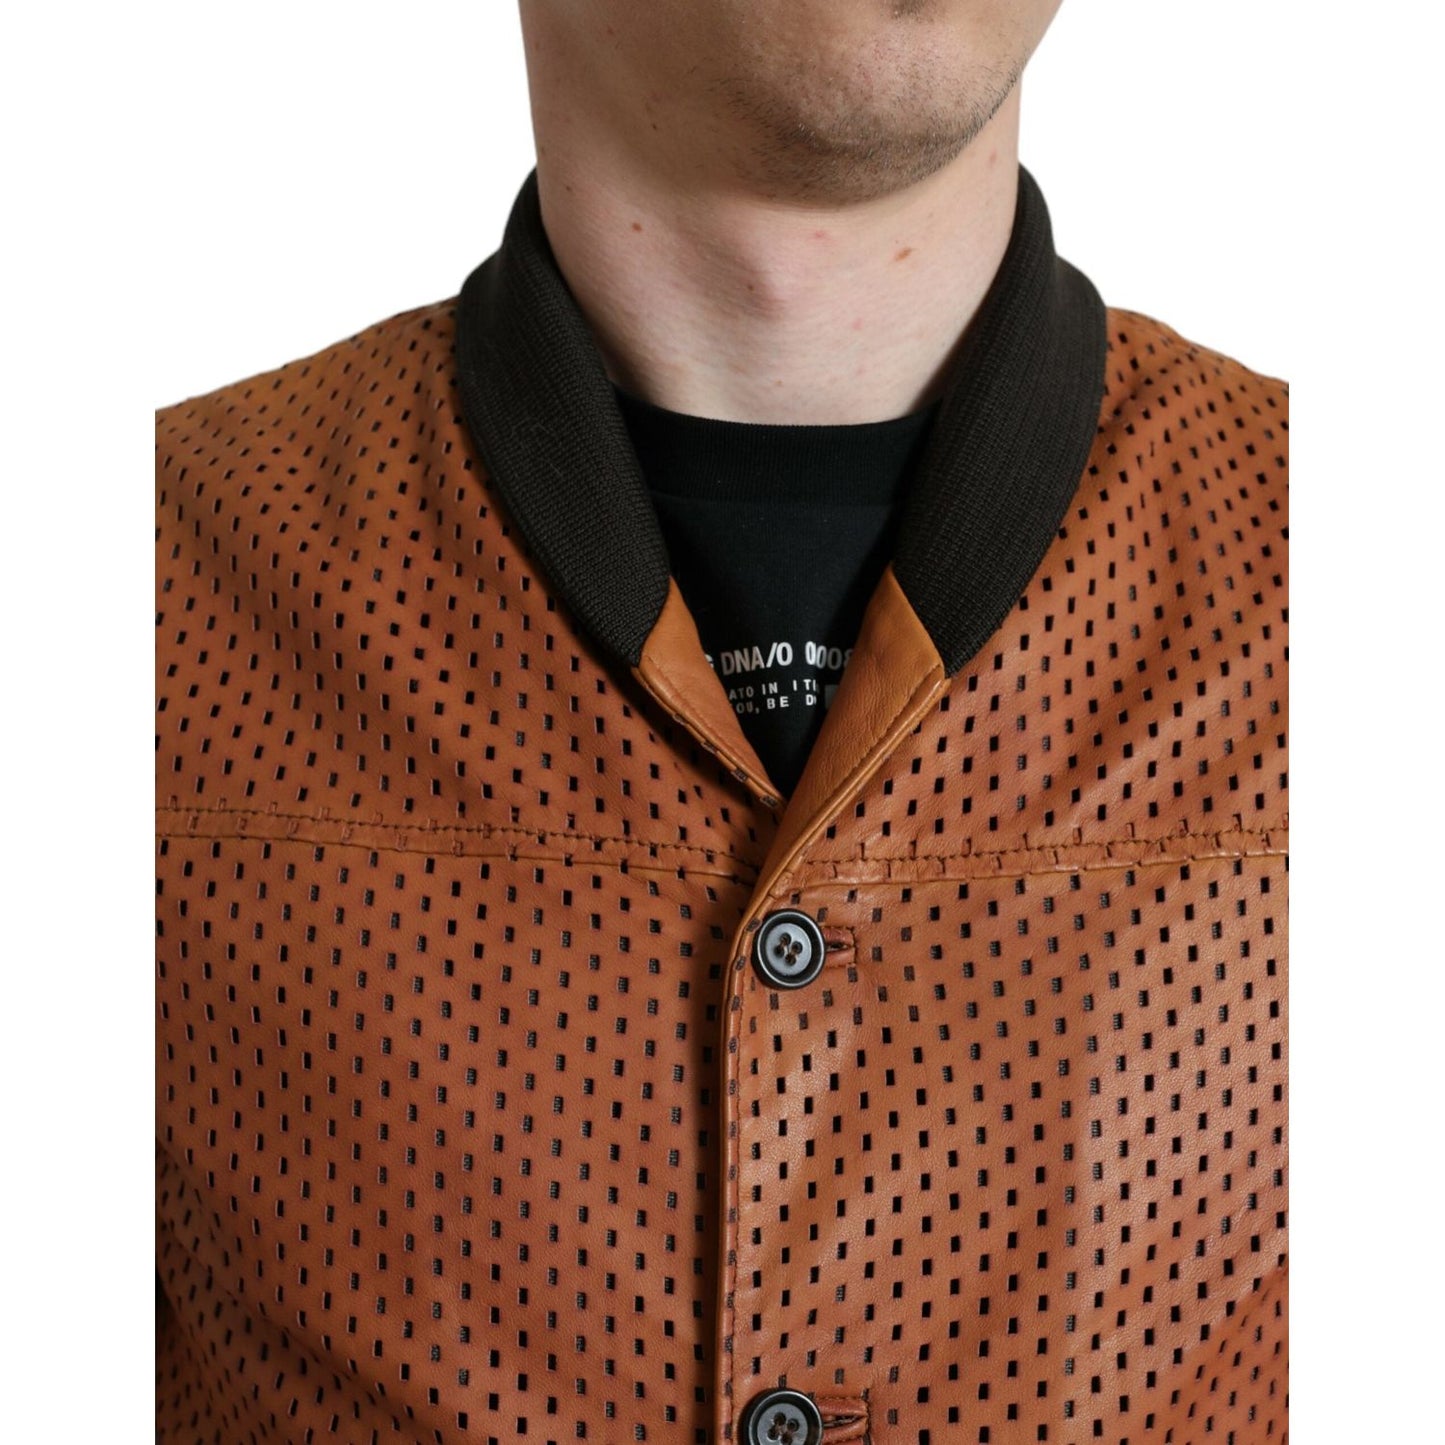 Dolce & Gabbana Elegant Leather Perforated Bomber Jacket brown-lambskin-leather-perforated-jacket